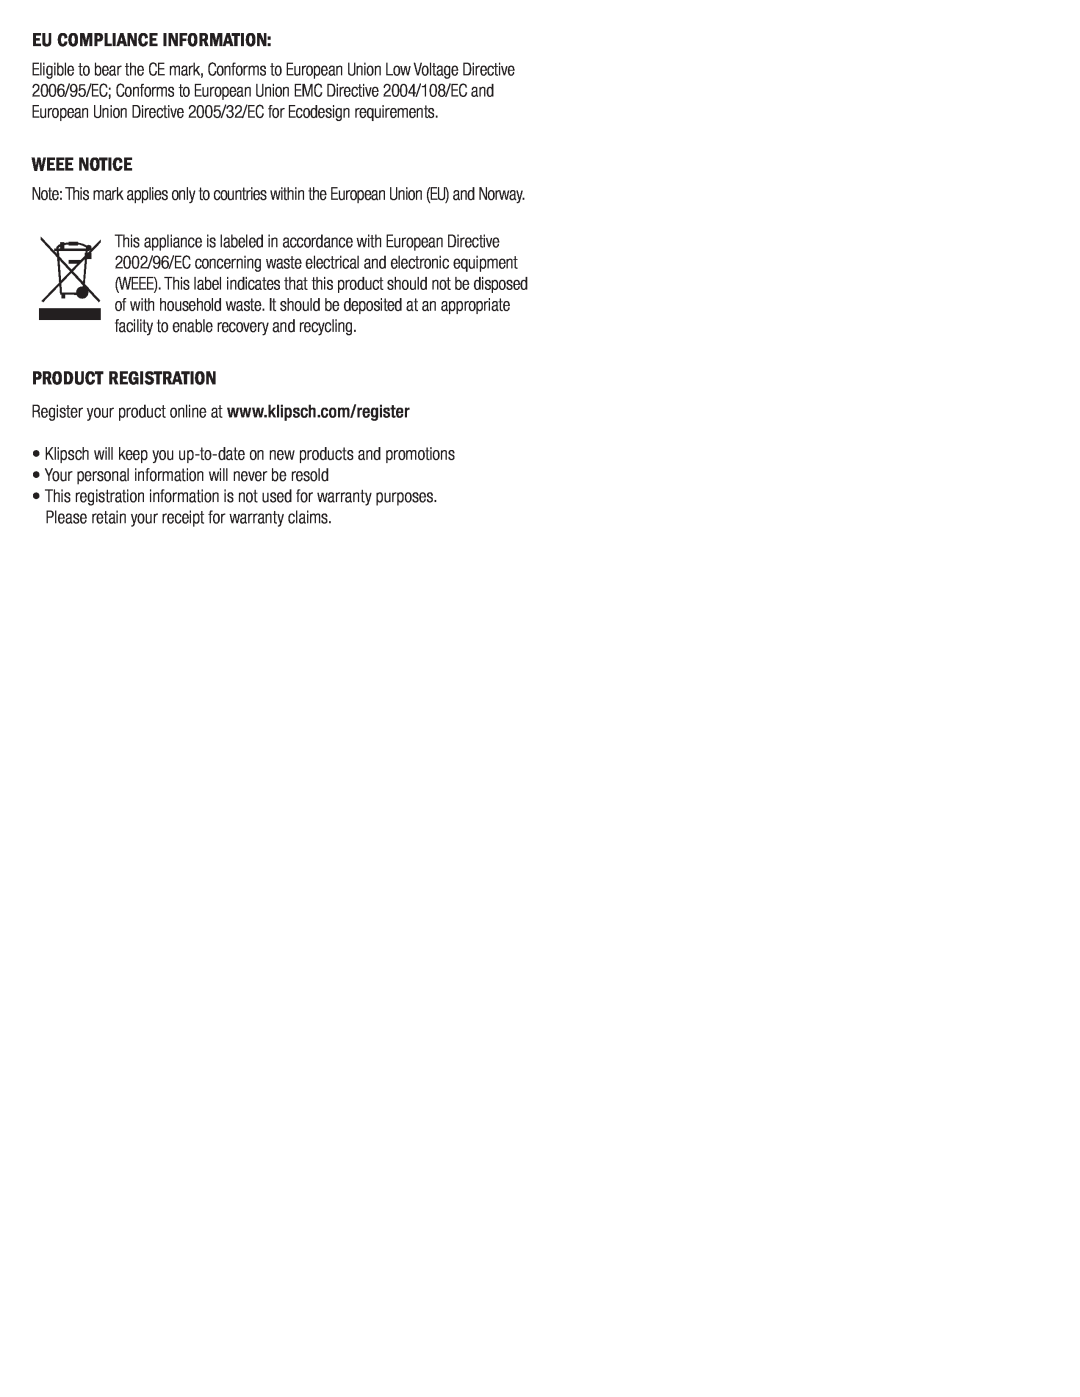 Klipsch SW-311 owner manual Eu Compliance Information, Weee Notice, Product Registration 